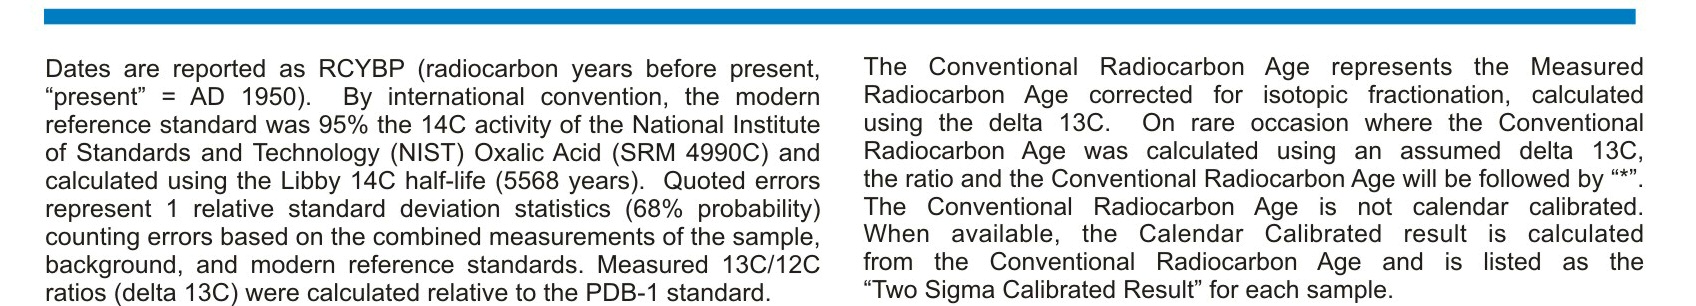 Ms. Kristine Reiersen Report Date: 1/27/2015 University of Stavanger Material Received: 1/19/2015 Sample Data Measured 13C/12C Conventional Radiocarbon Age Ratio Radiocarbon Age(*) Beta - 402110 1920